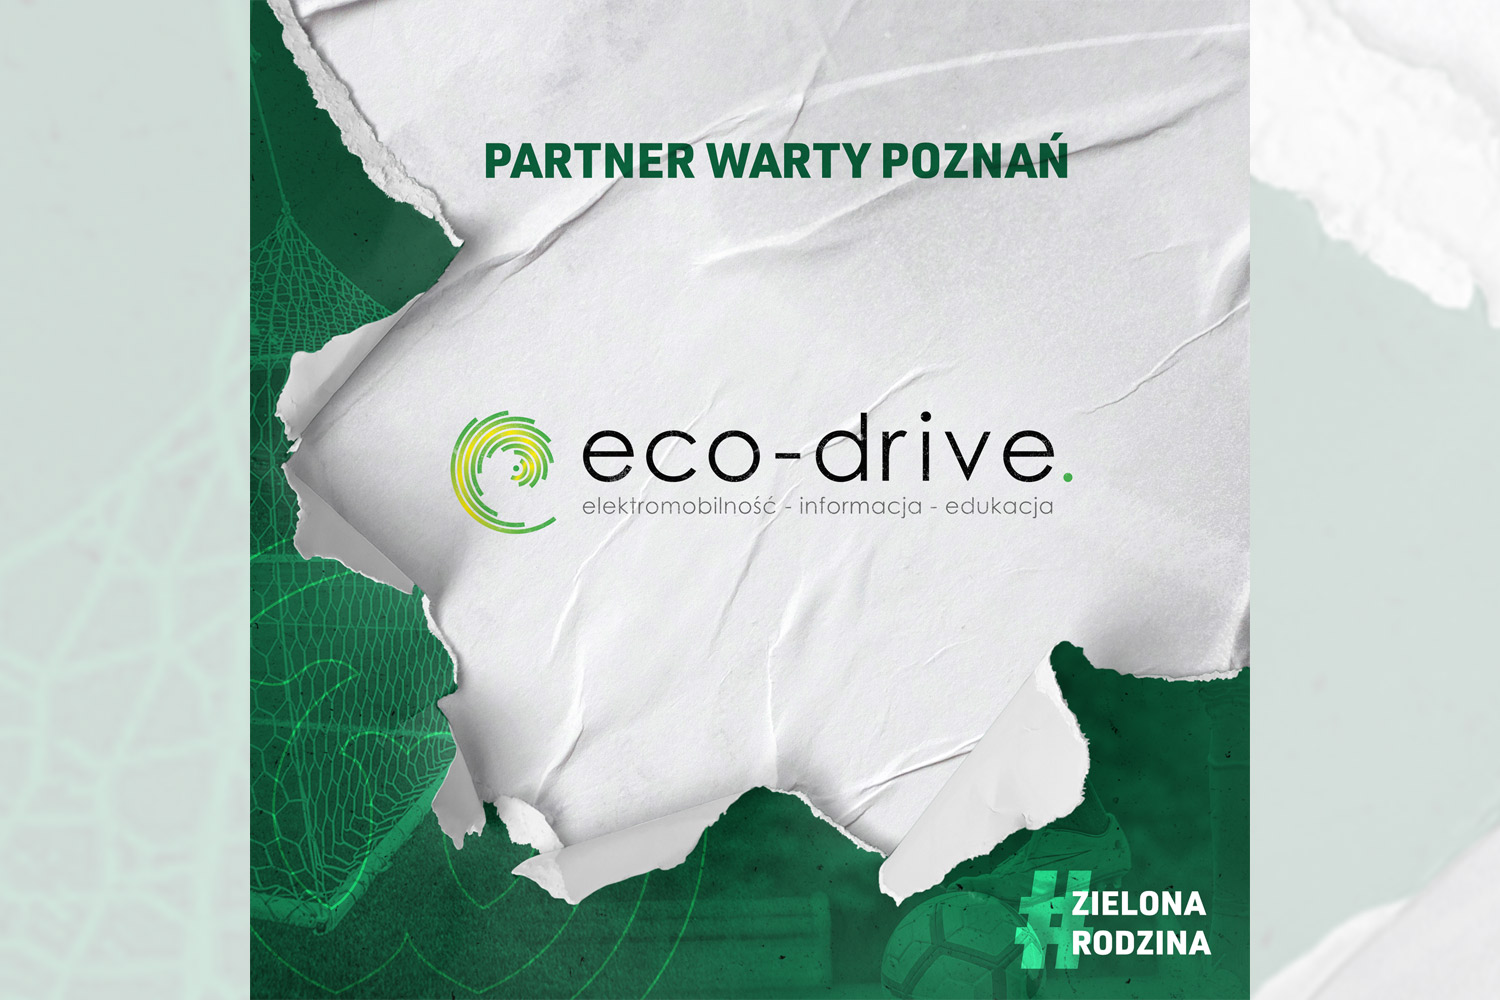 Portal eco-drive.pl partnerem Warty Poznań